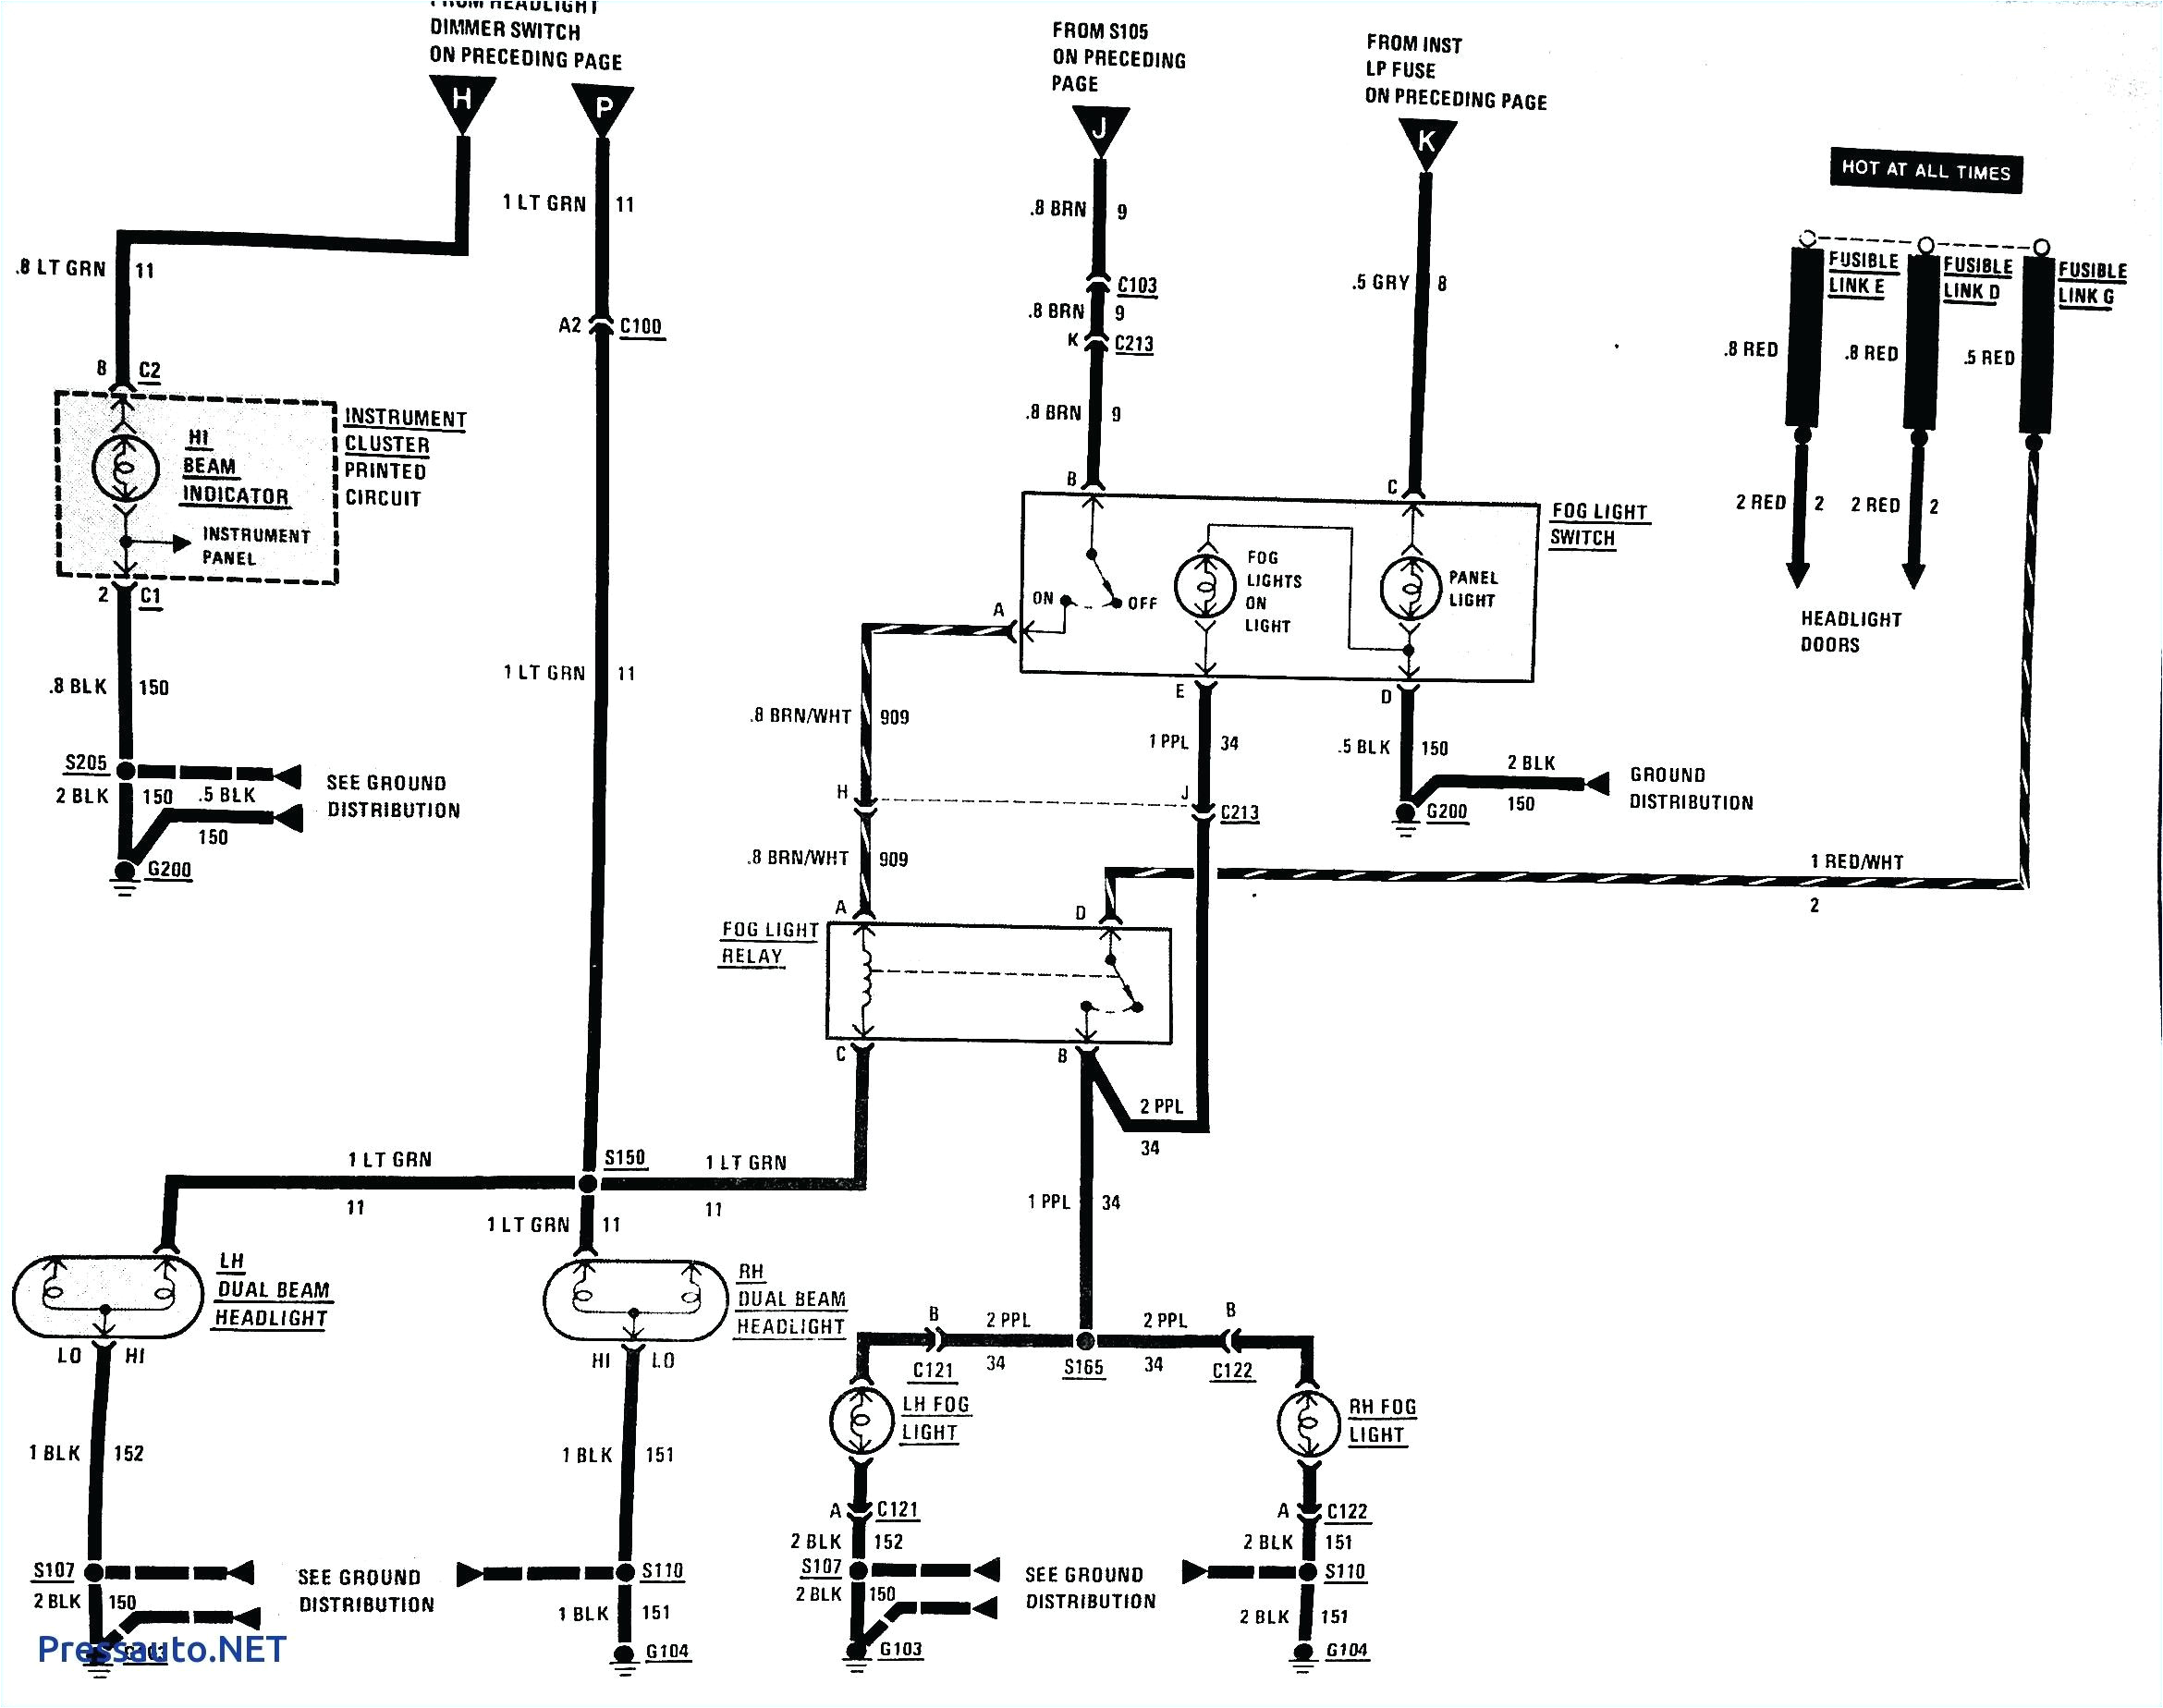 amazing rule 750 automatic bilge pump wiring diagram installing rh motherwill com